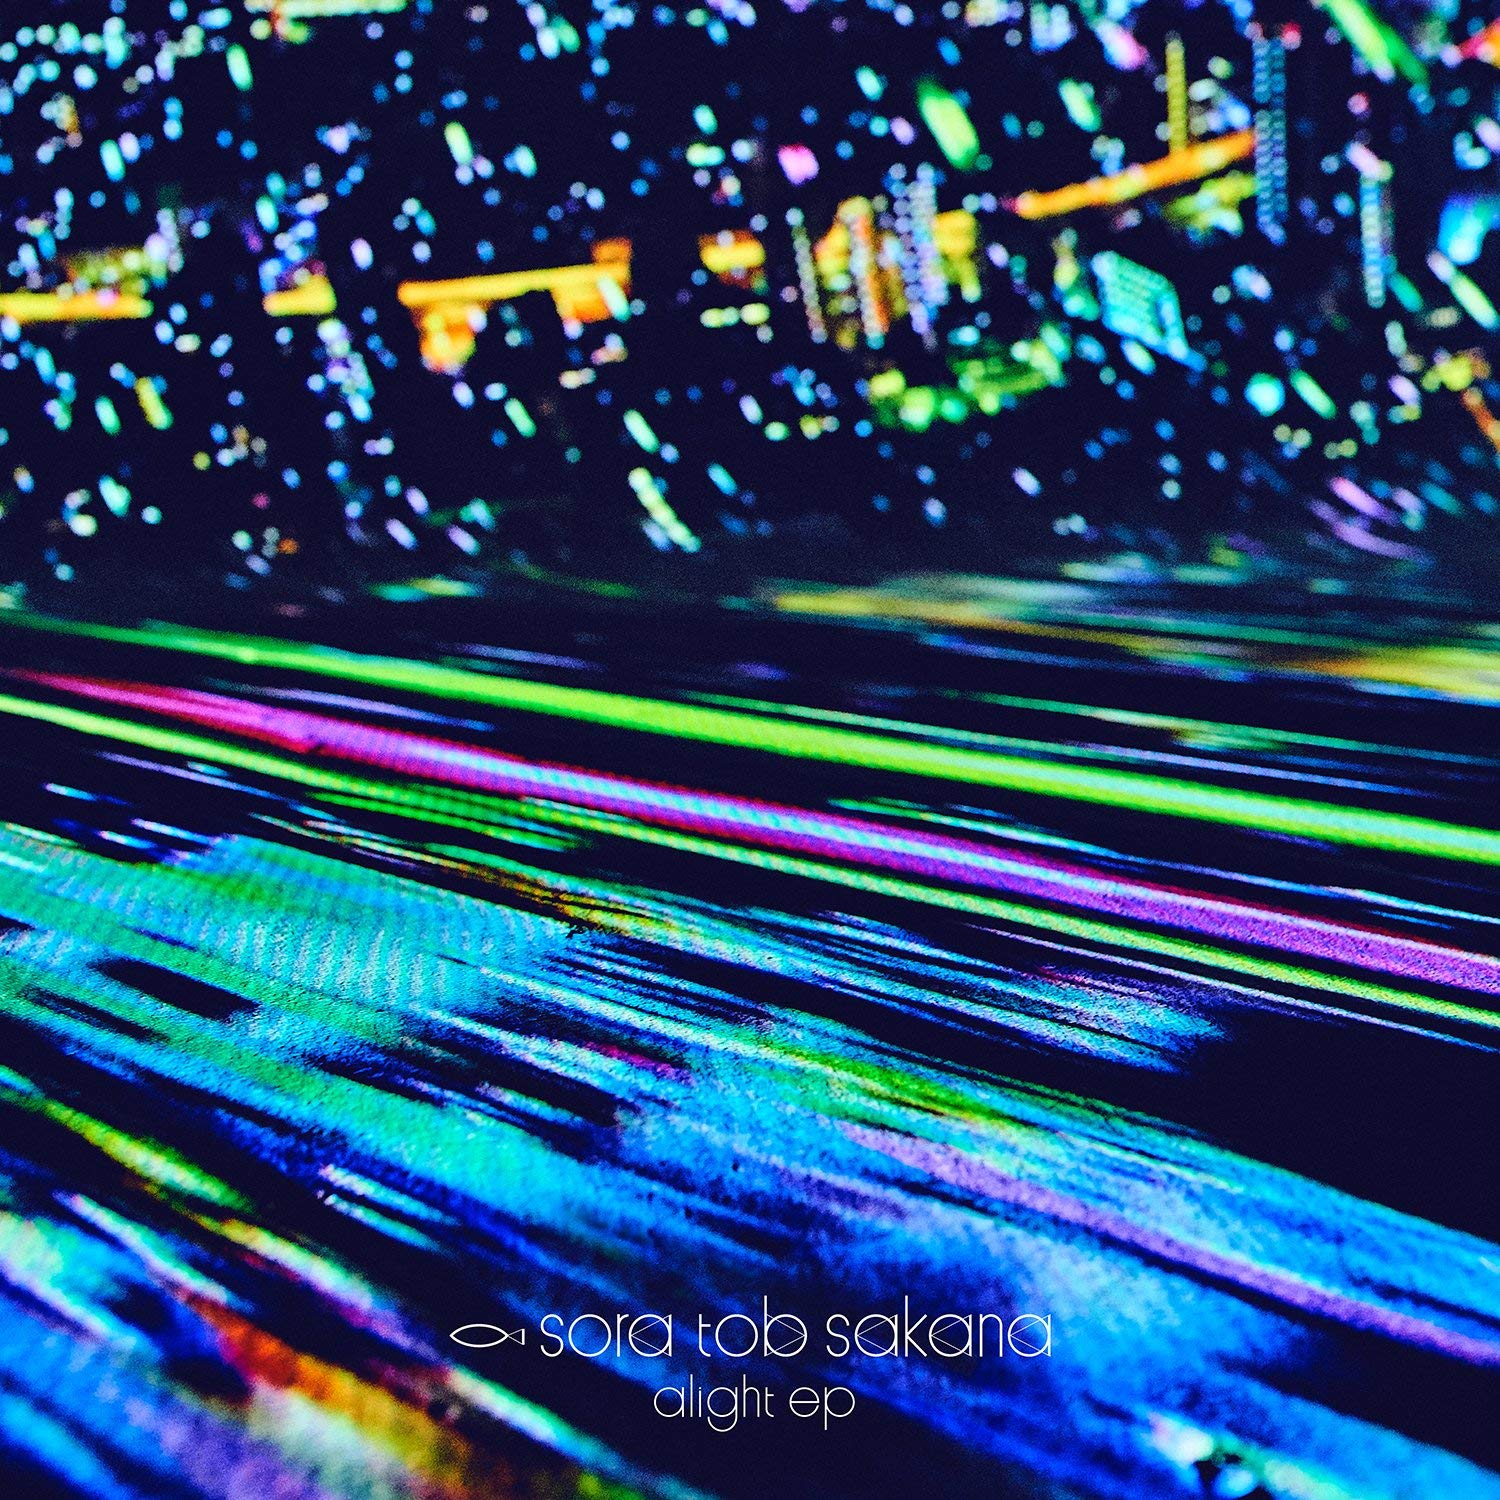 Kaguya-sama S3 Ep. 13 OST - 'Believe' (信じて) - Piano Cover 